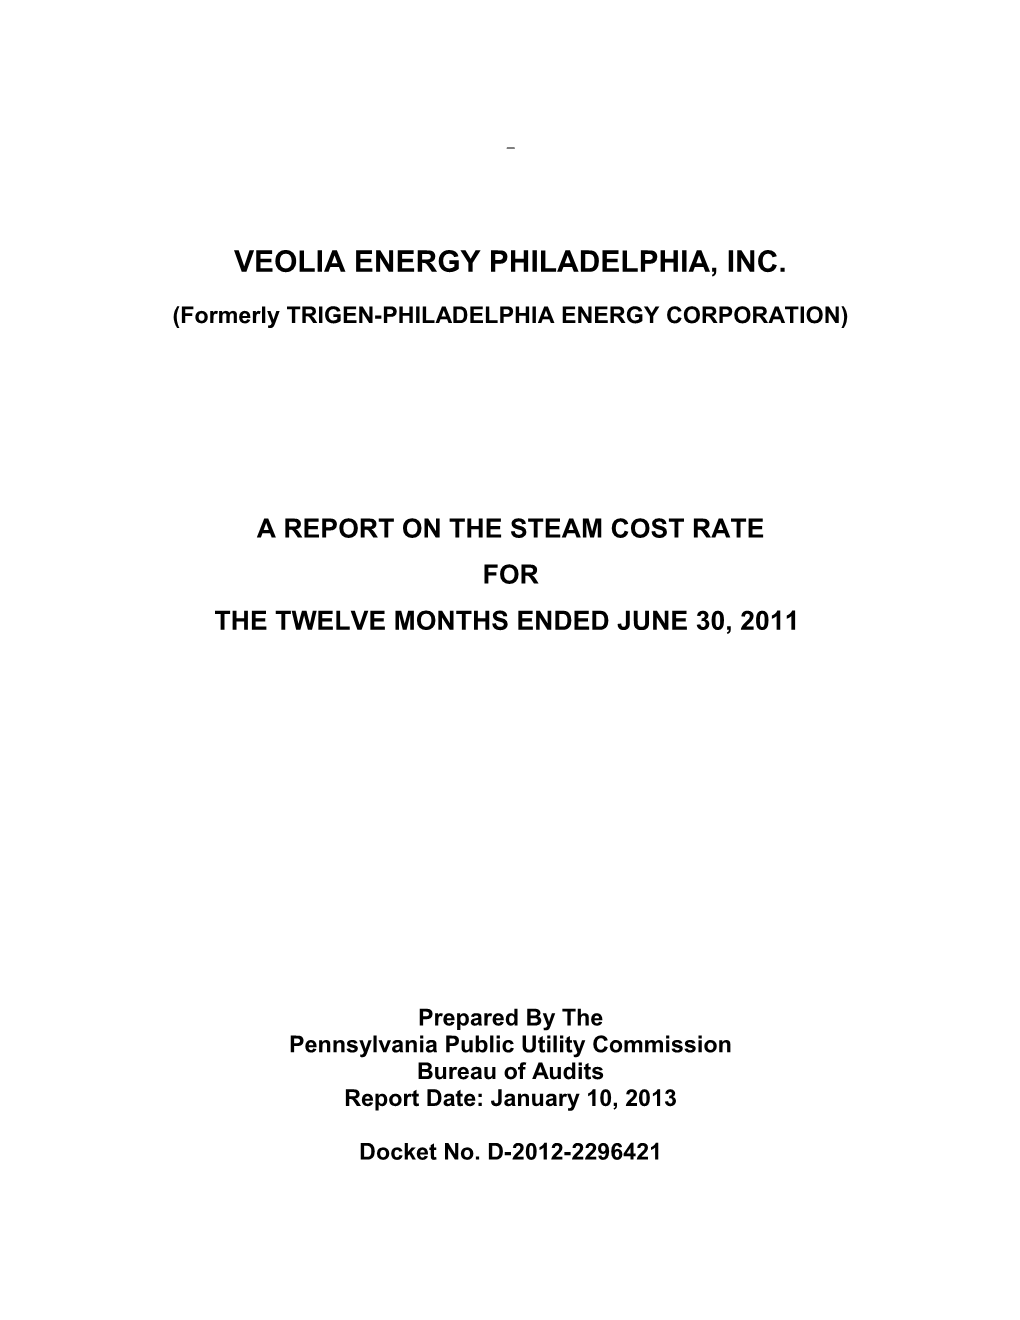 Trigen-Philadelphia Energy Corporation